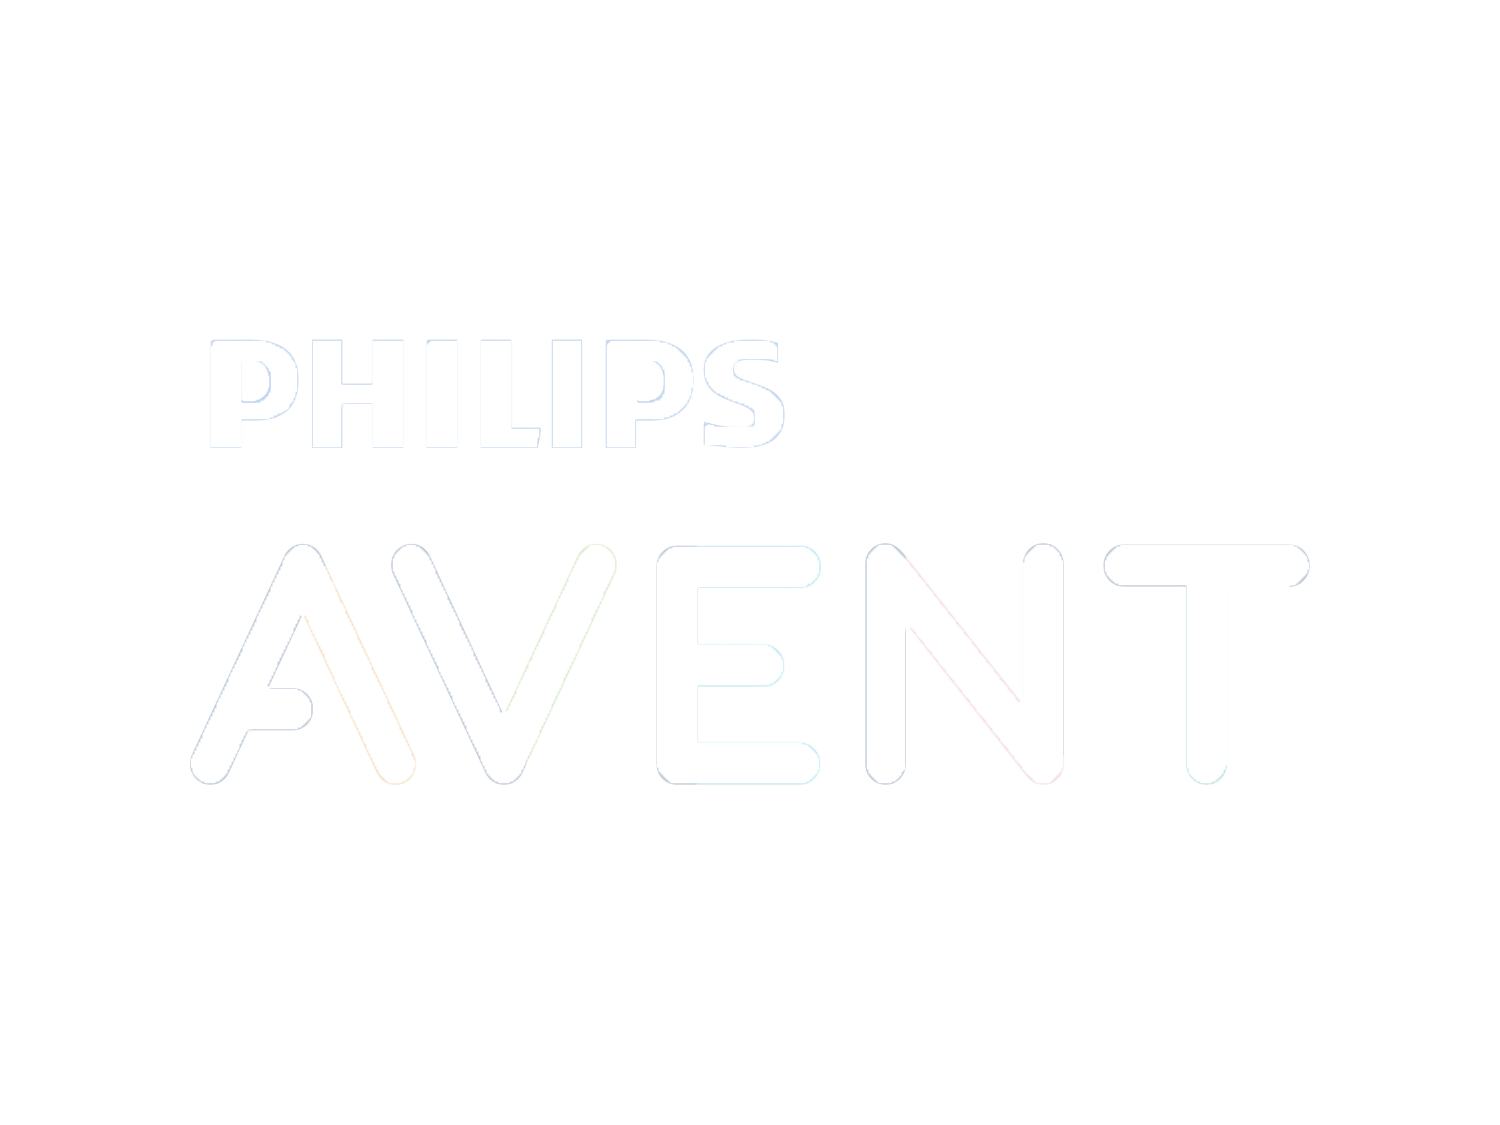 Philips_Avent-Logo.wine-1356152098